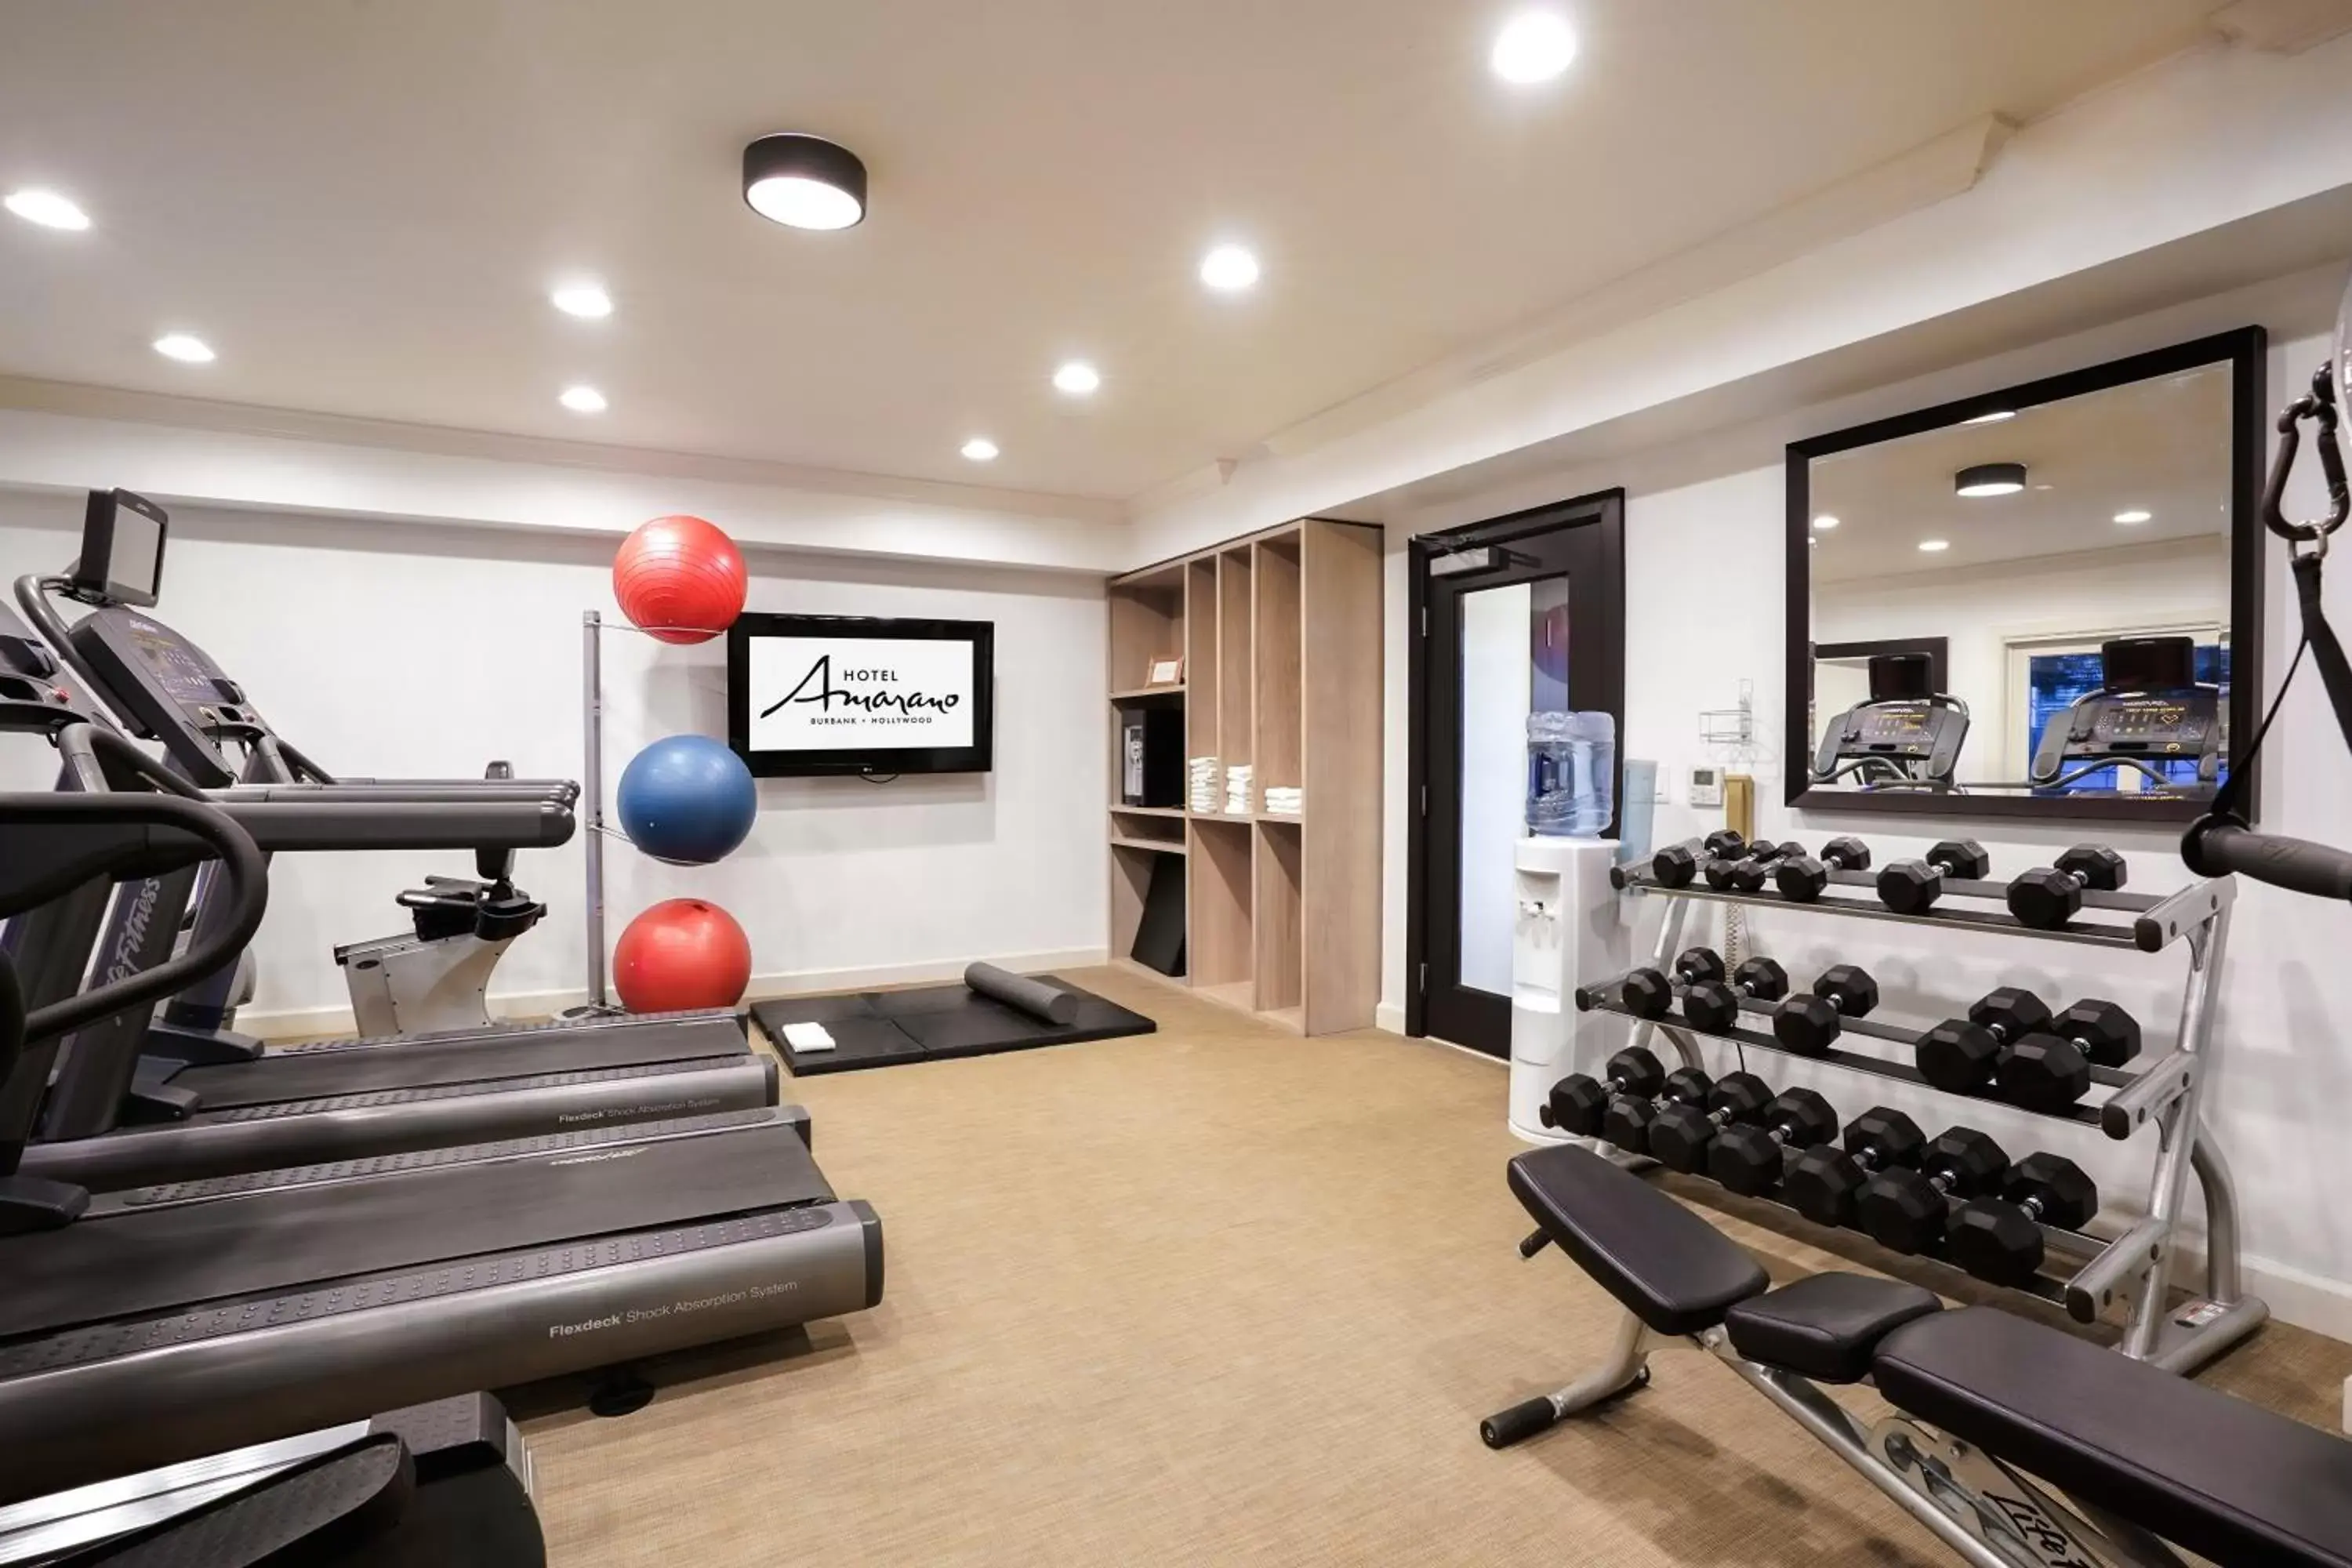 Fitness centre/facilities, Fitness Center/Facilities in Hotel Amarano Burbank-Hollywood